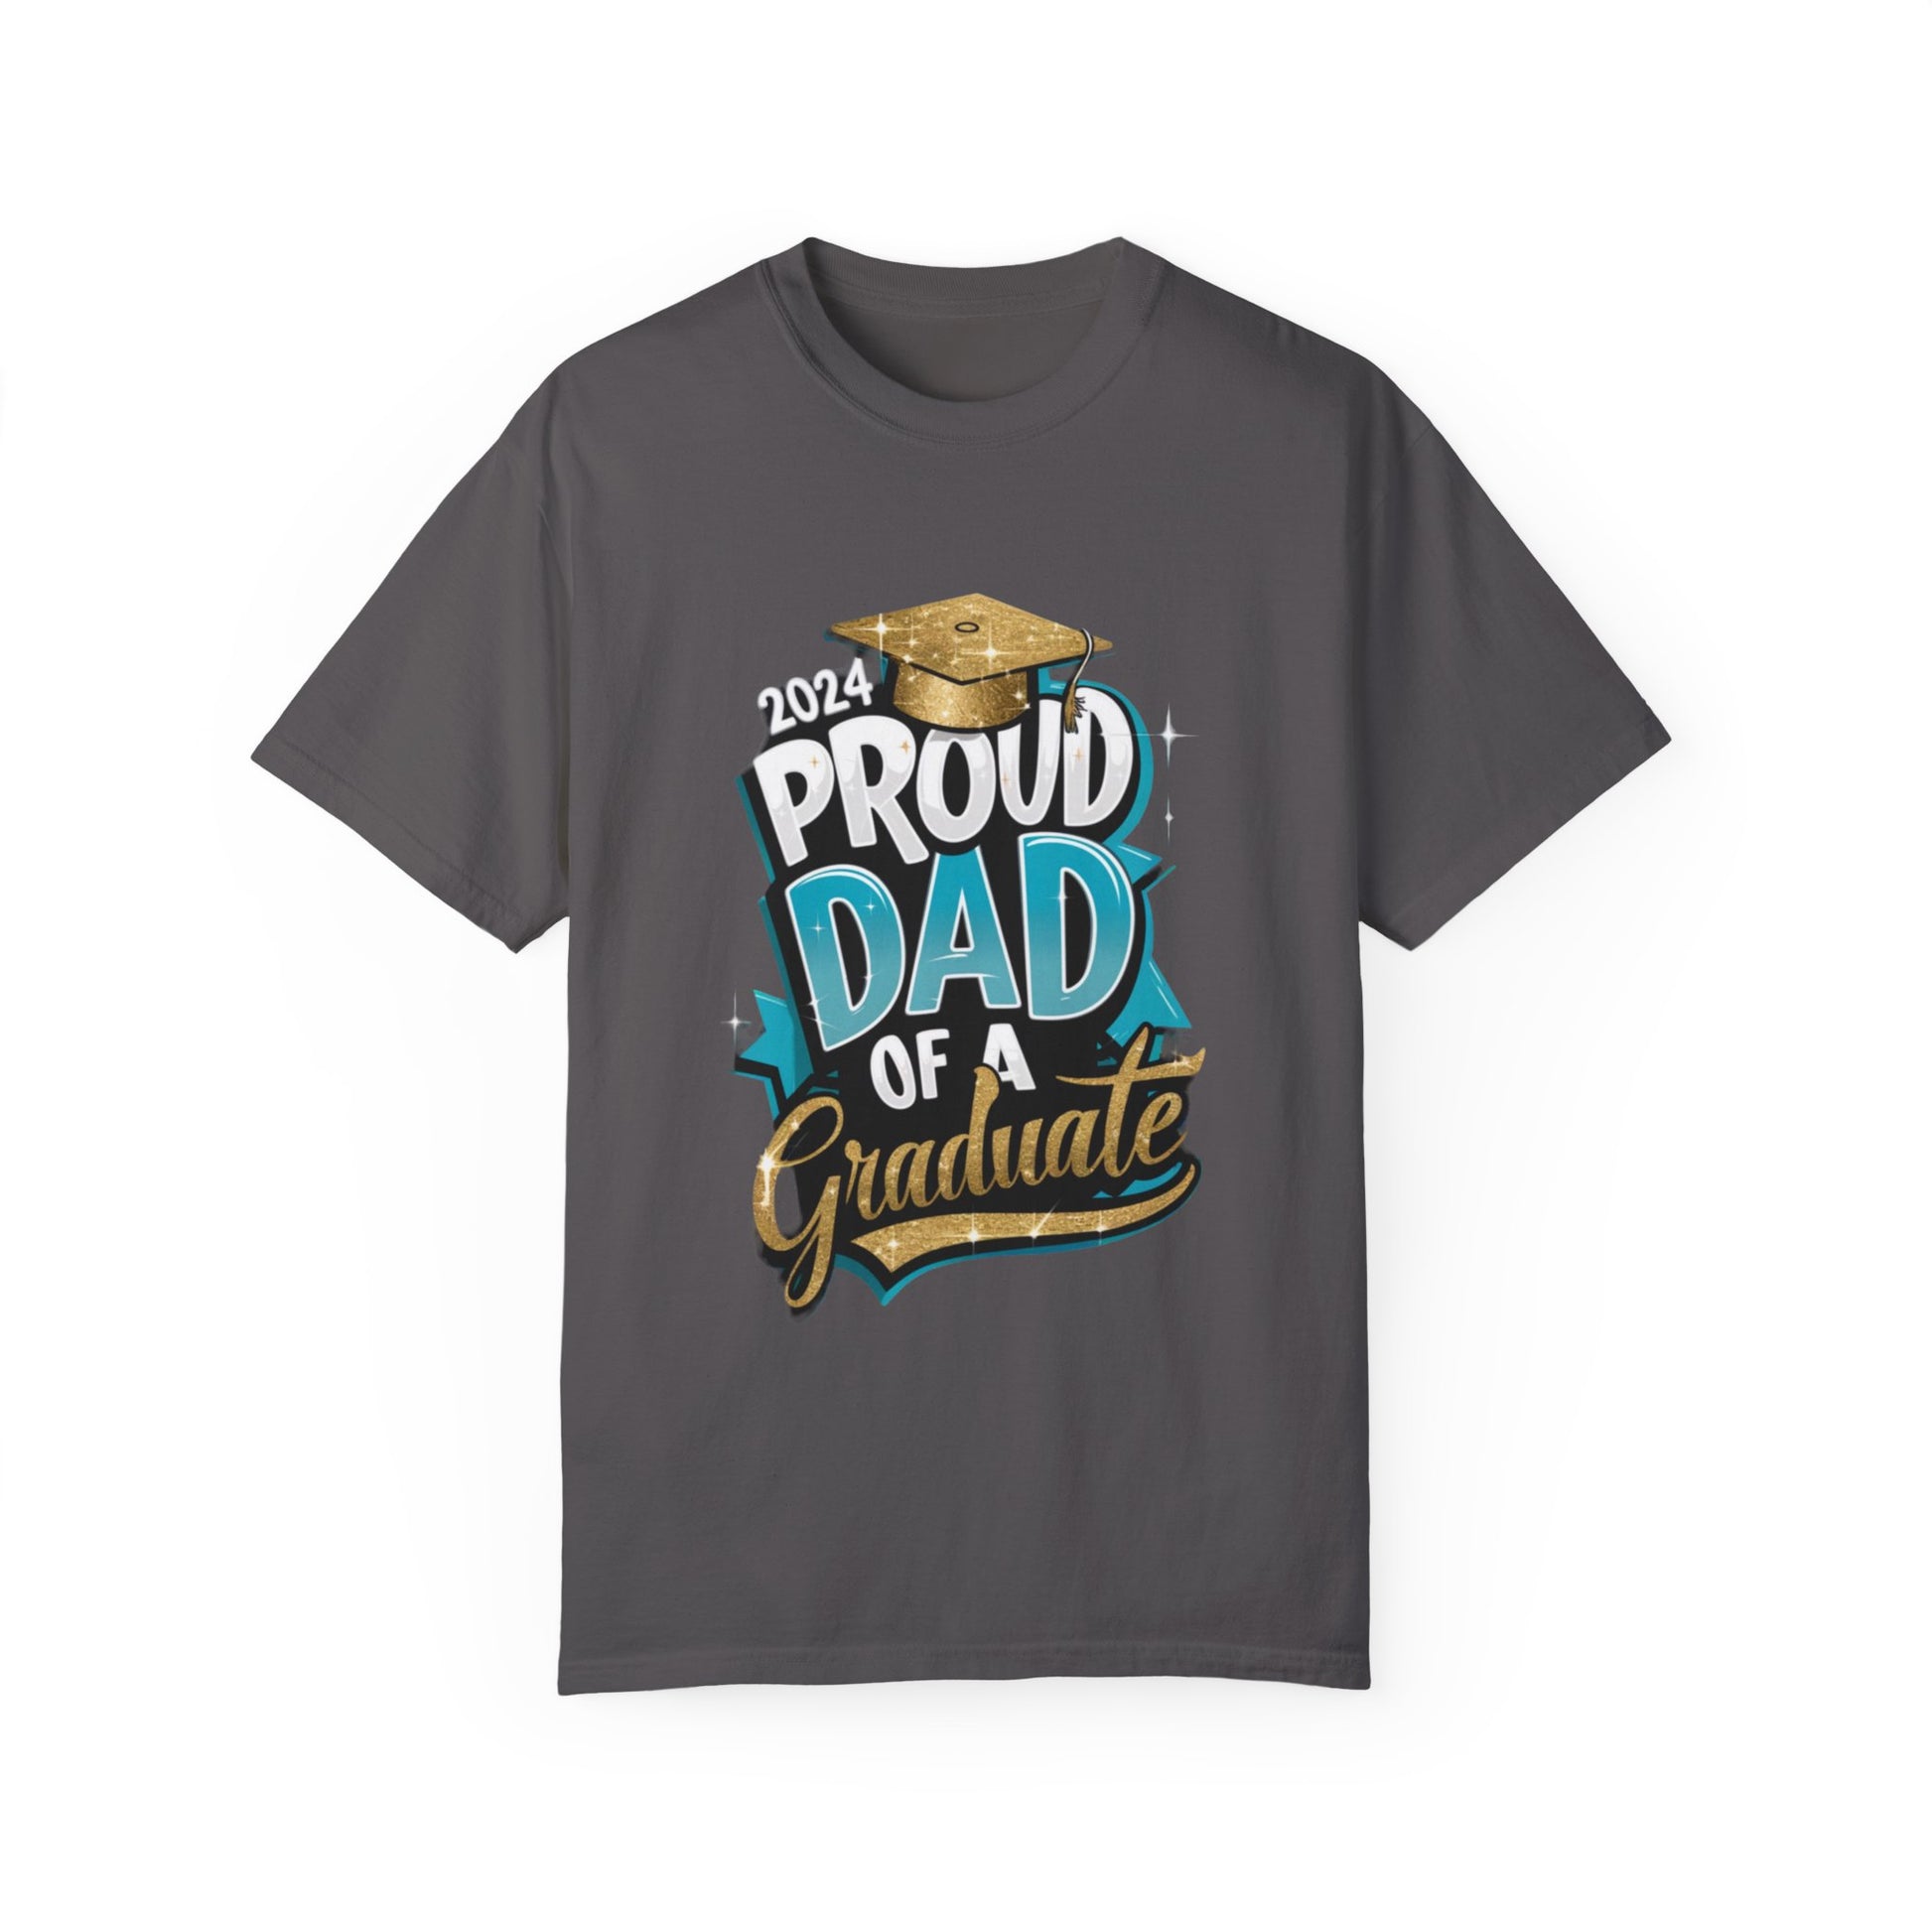 Proud Dad of a 2024 Graduate Unisex Garment-dyed T-shirt Cotton Funny Humorous Graphic Soft Premium Unisex Men Women Graphite T-shirt Birthday Gift-8